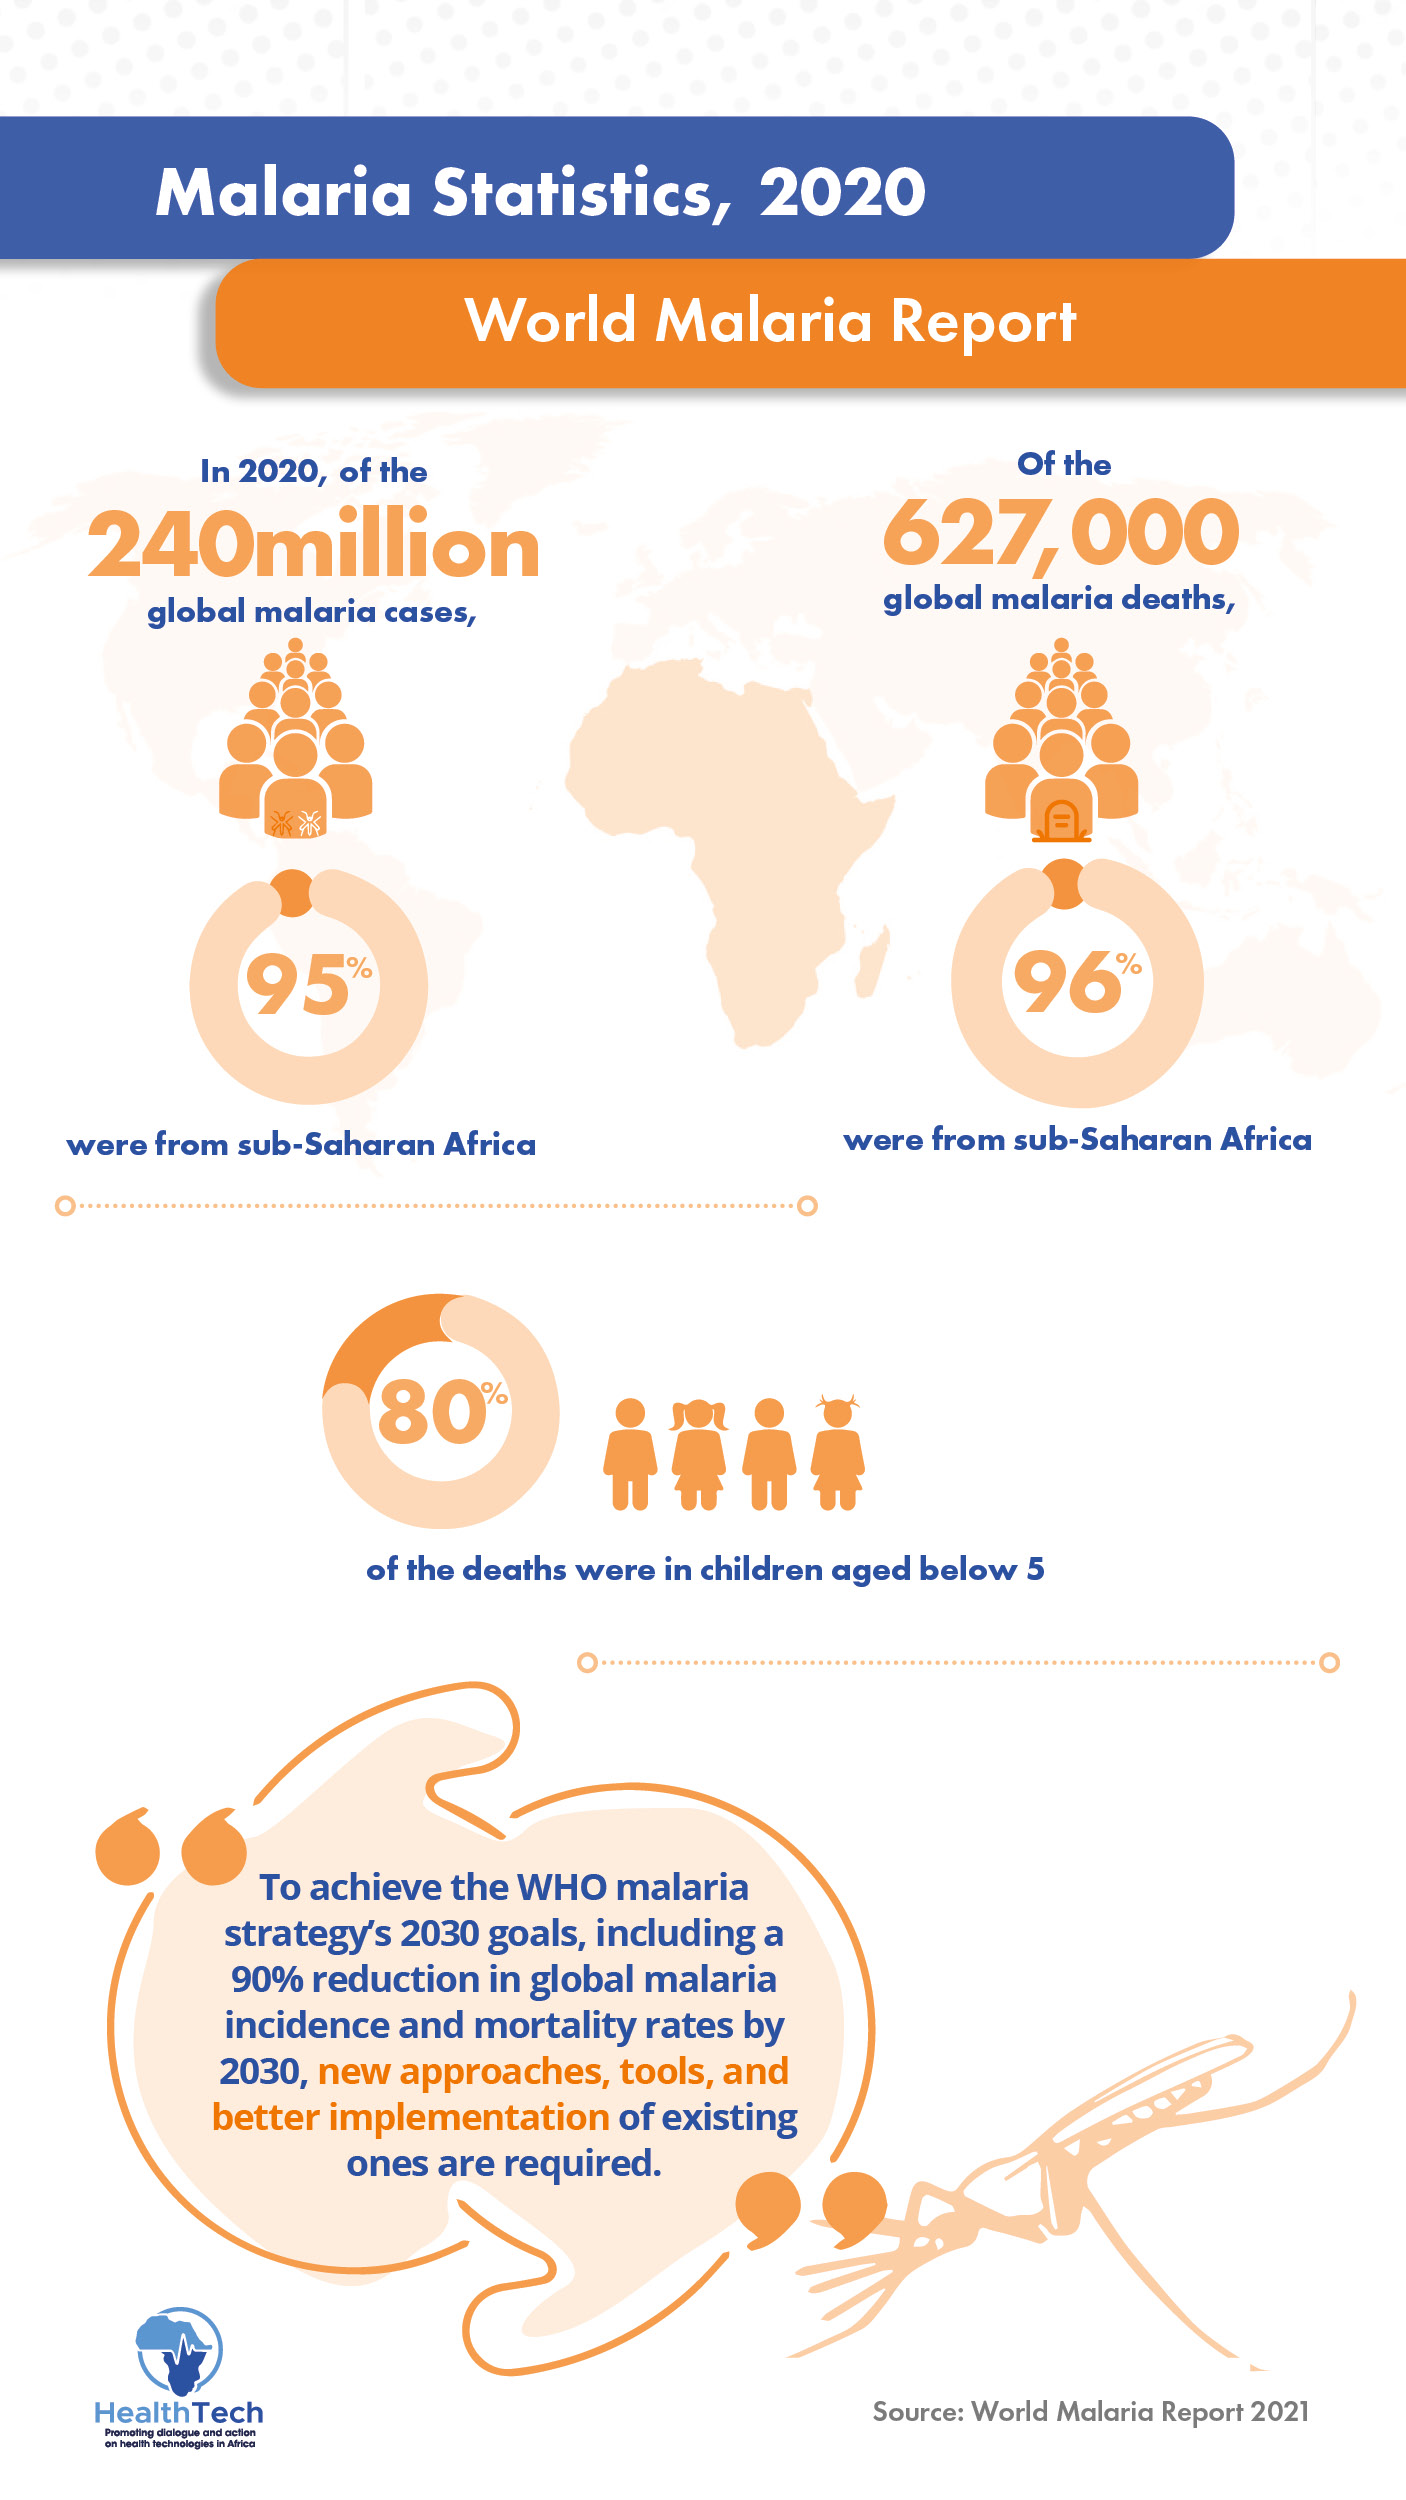 World malaria report 2020 summary